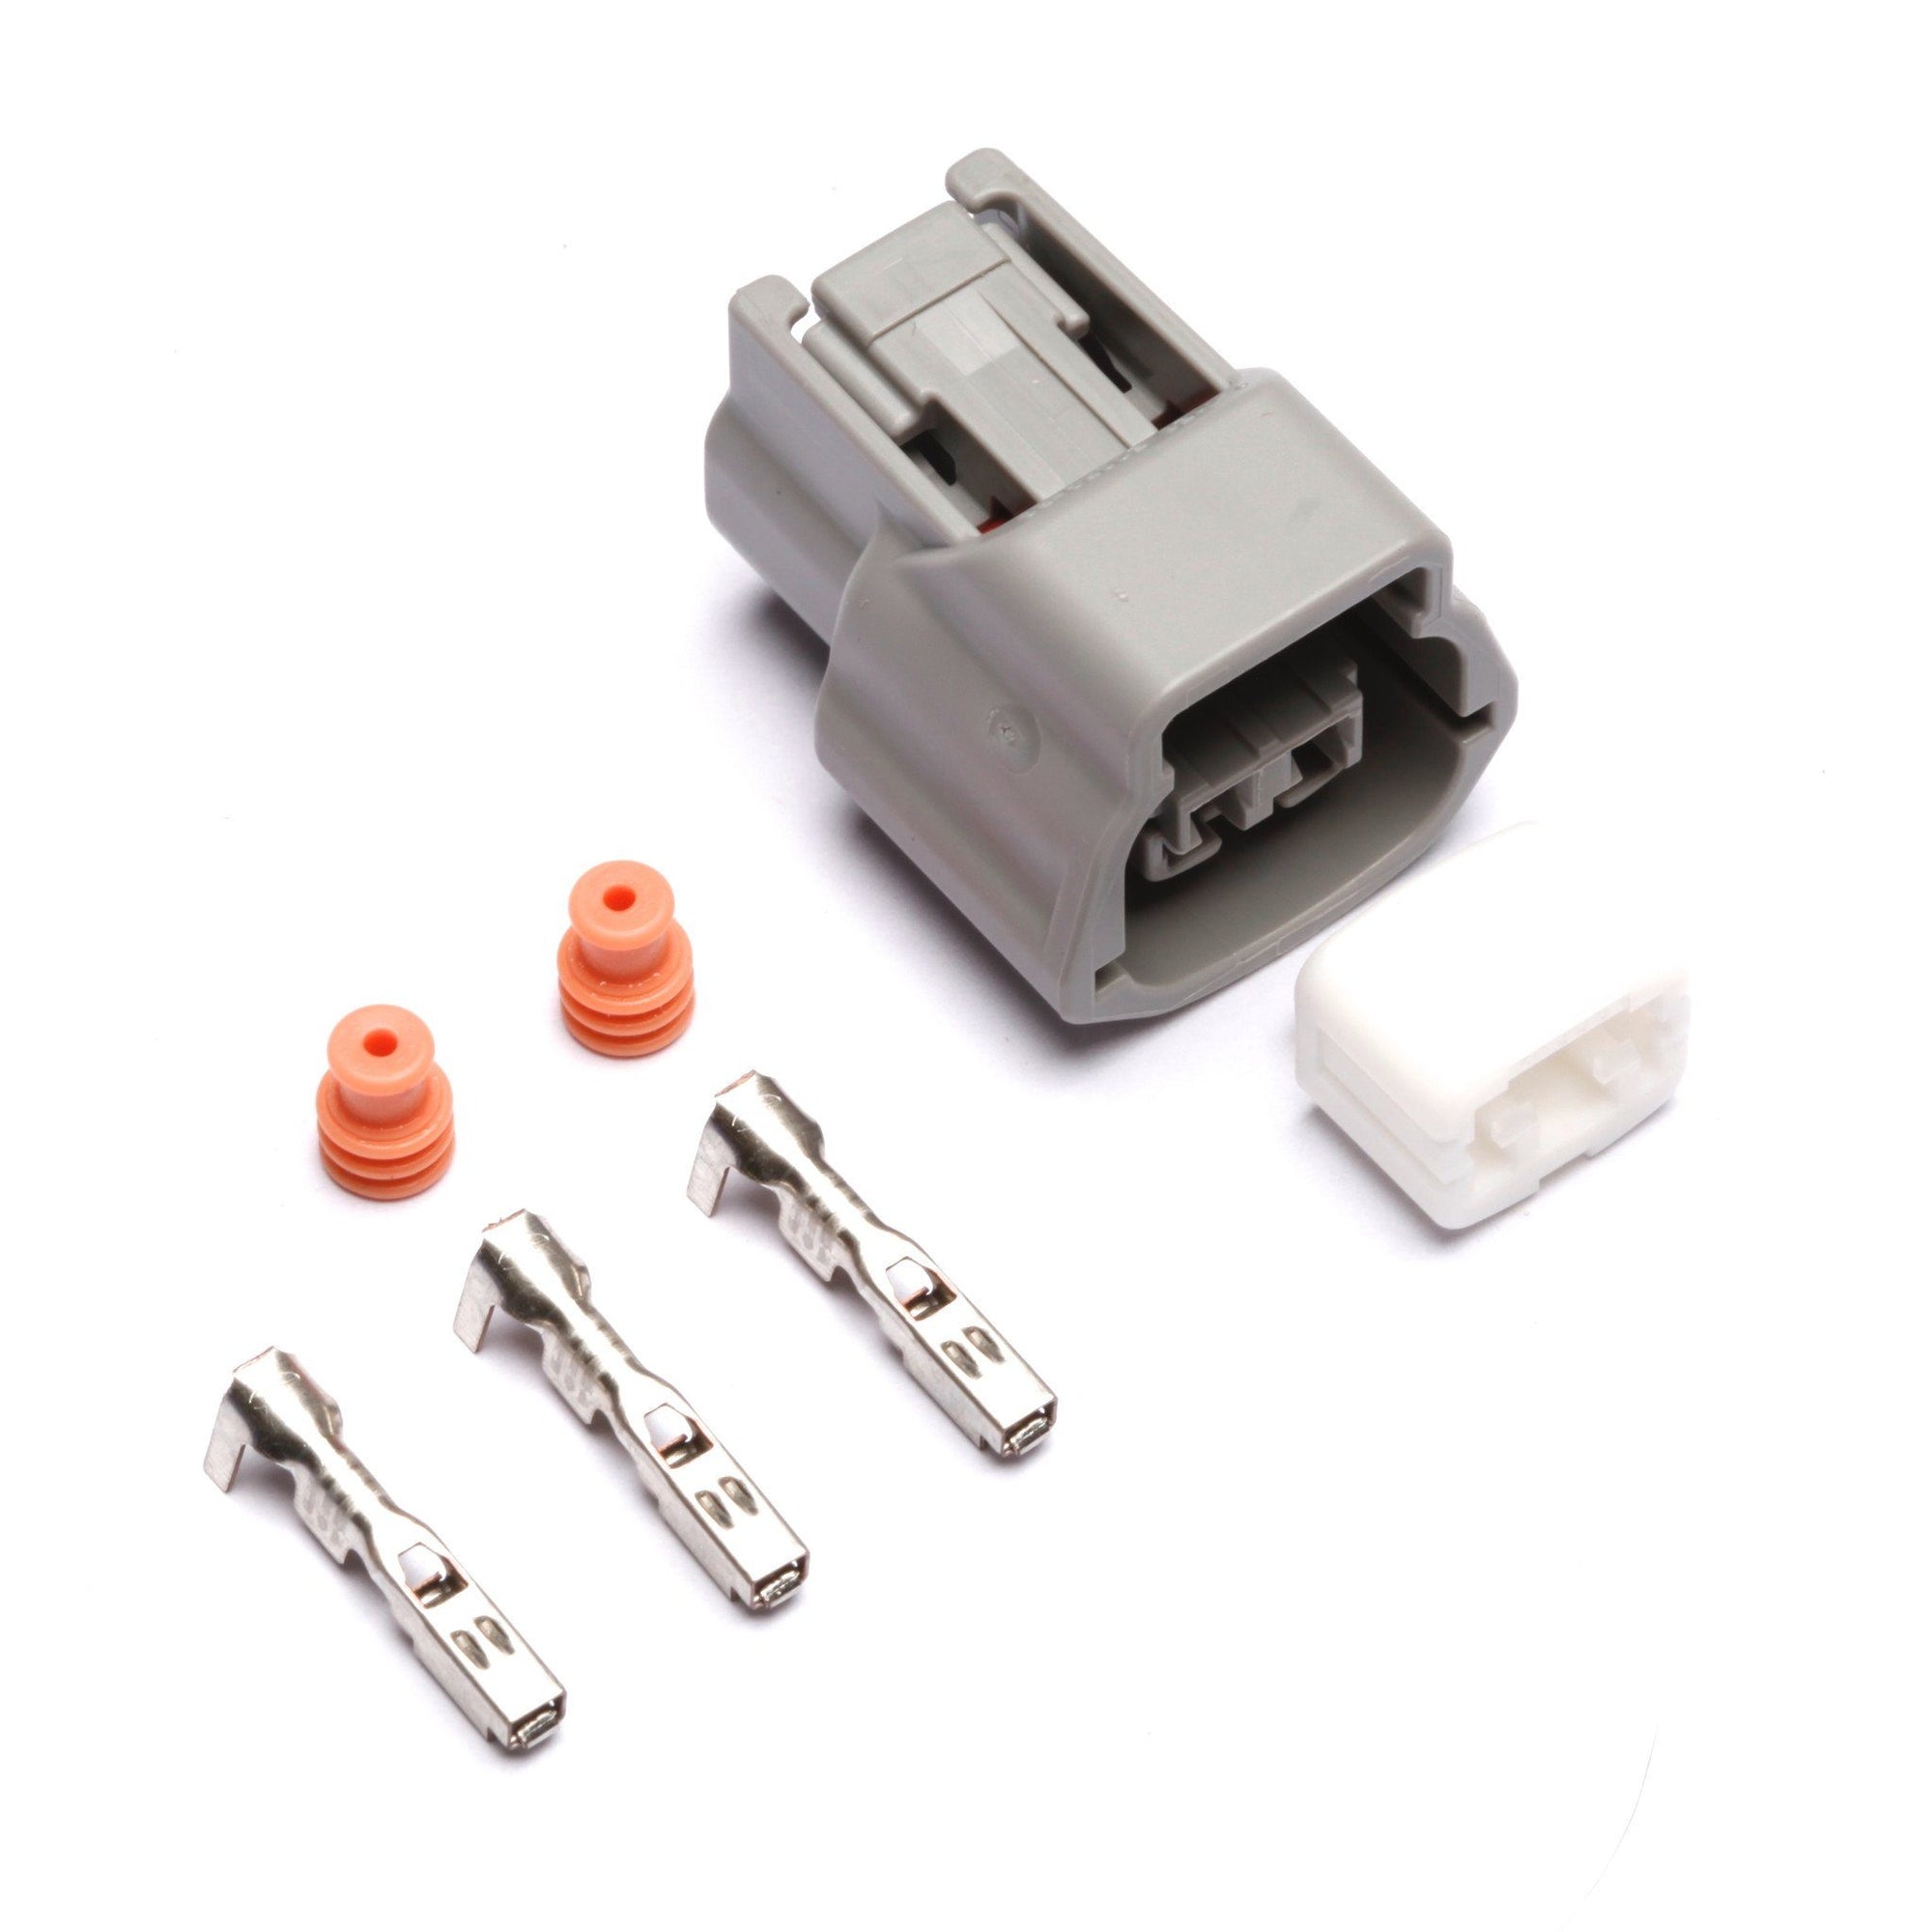 Connectors - Nissan 2-Position Connector Kit (Light Gray)